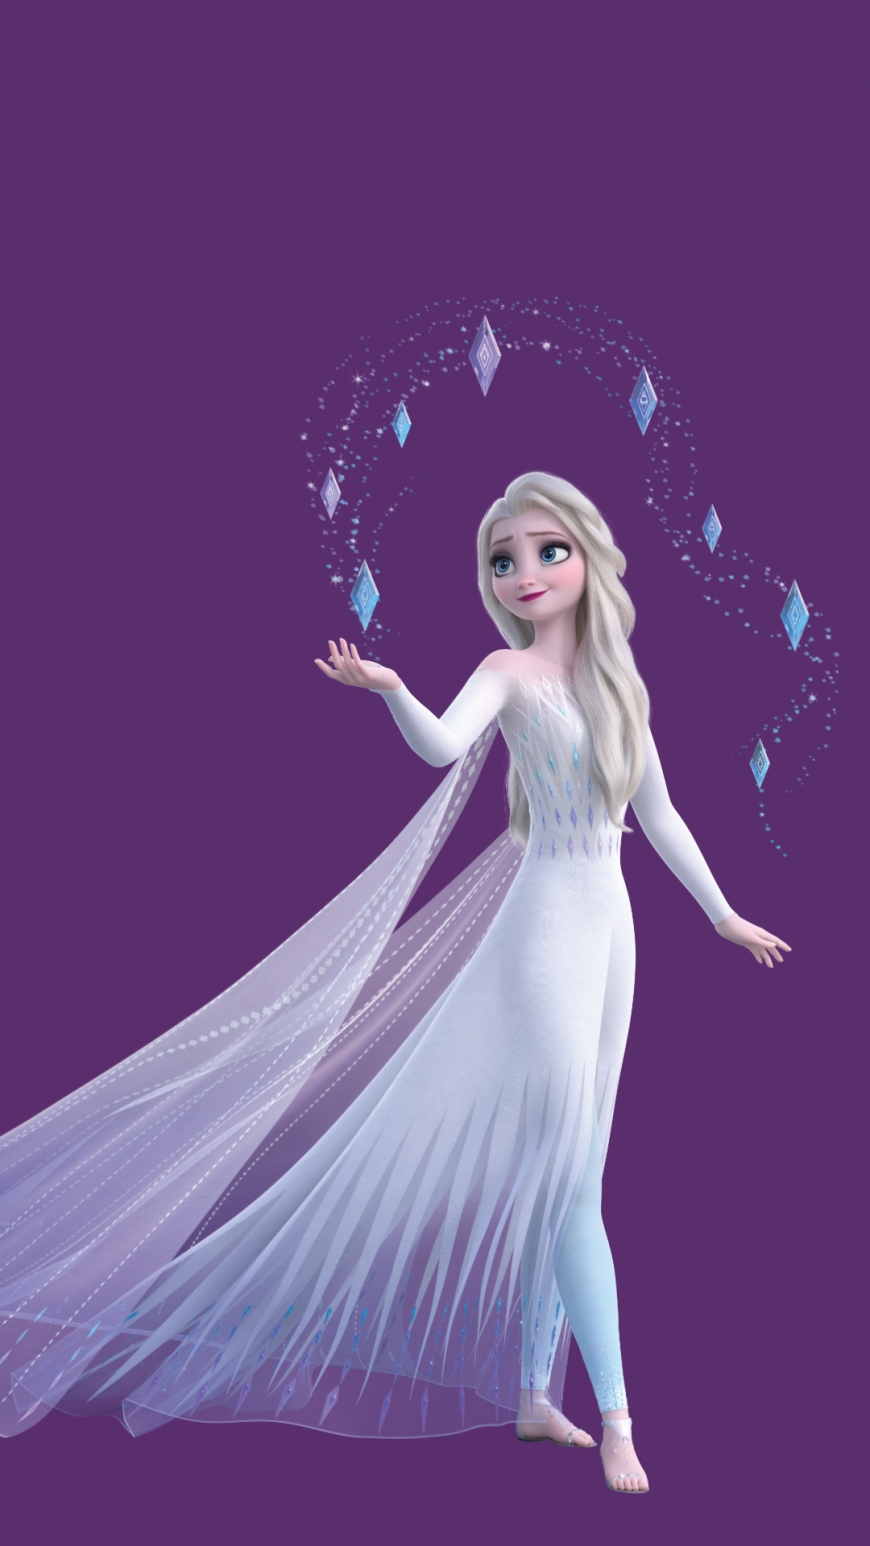 Frozen 2 Elsa Wallpaper Free Frozen 2 Elsa Background